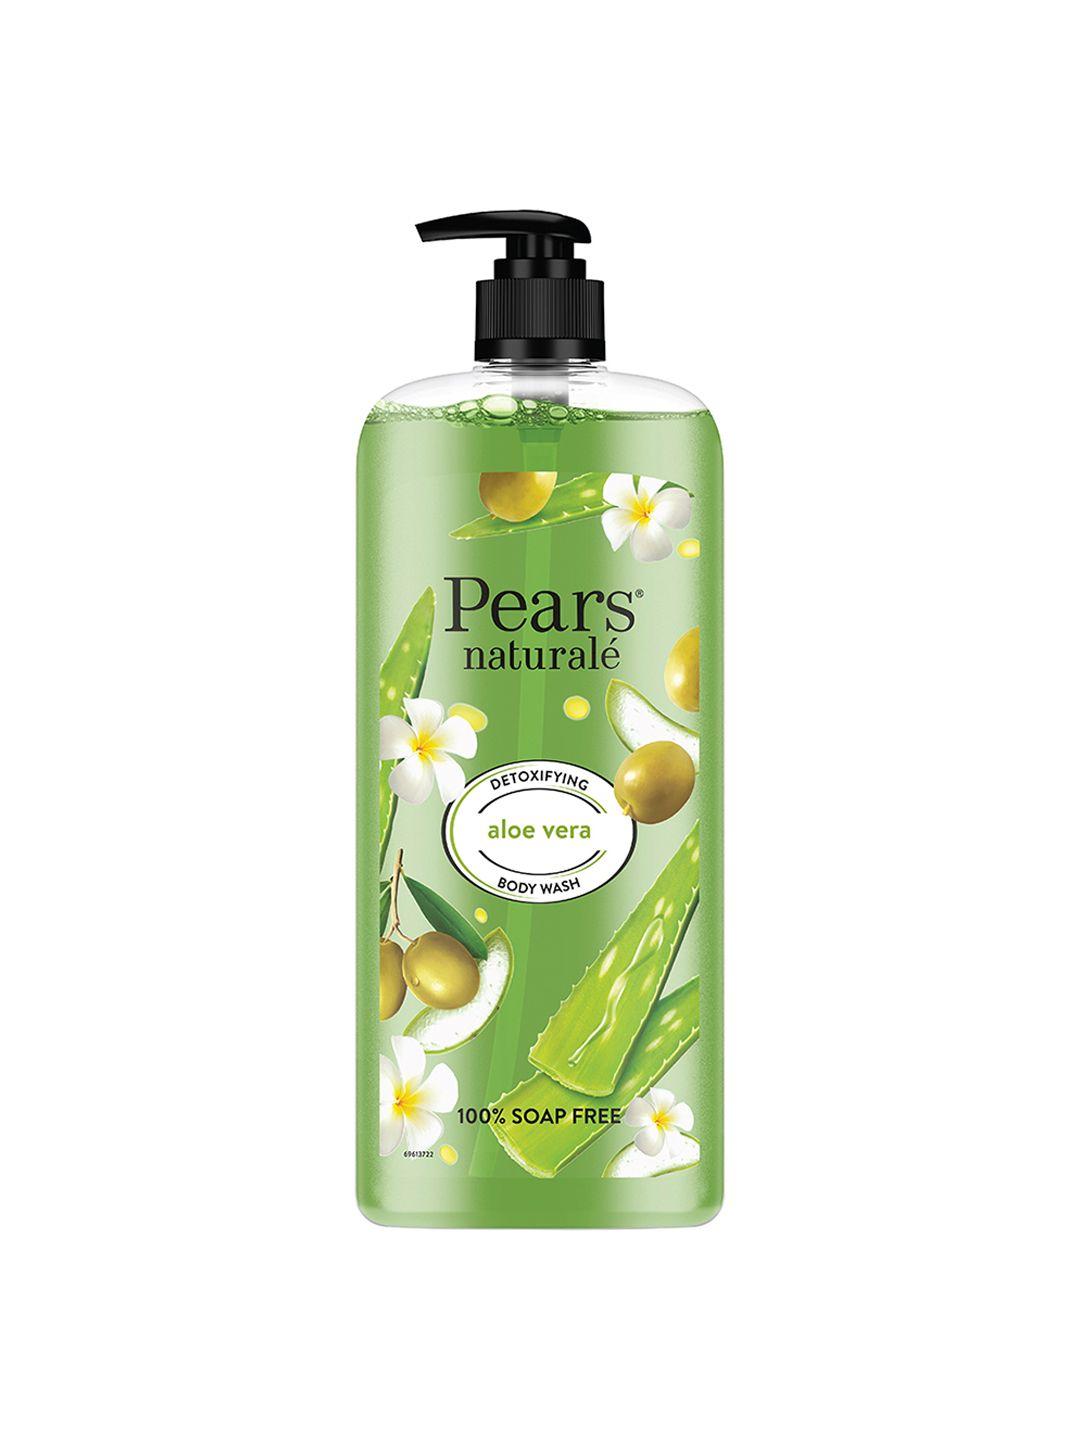 pears-naturale-detoxifying-aloe-vera-soap-free-body-wash-with-olive-oil---750-ml